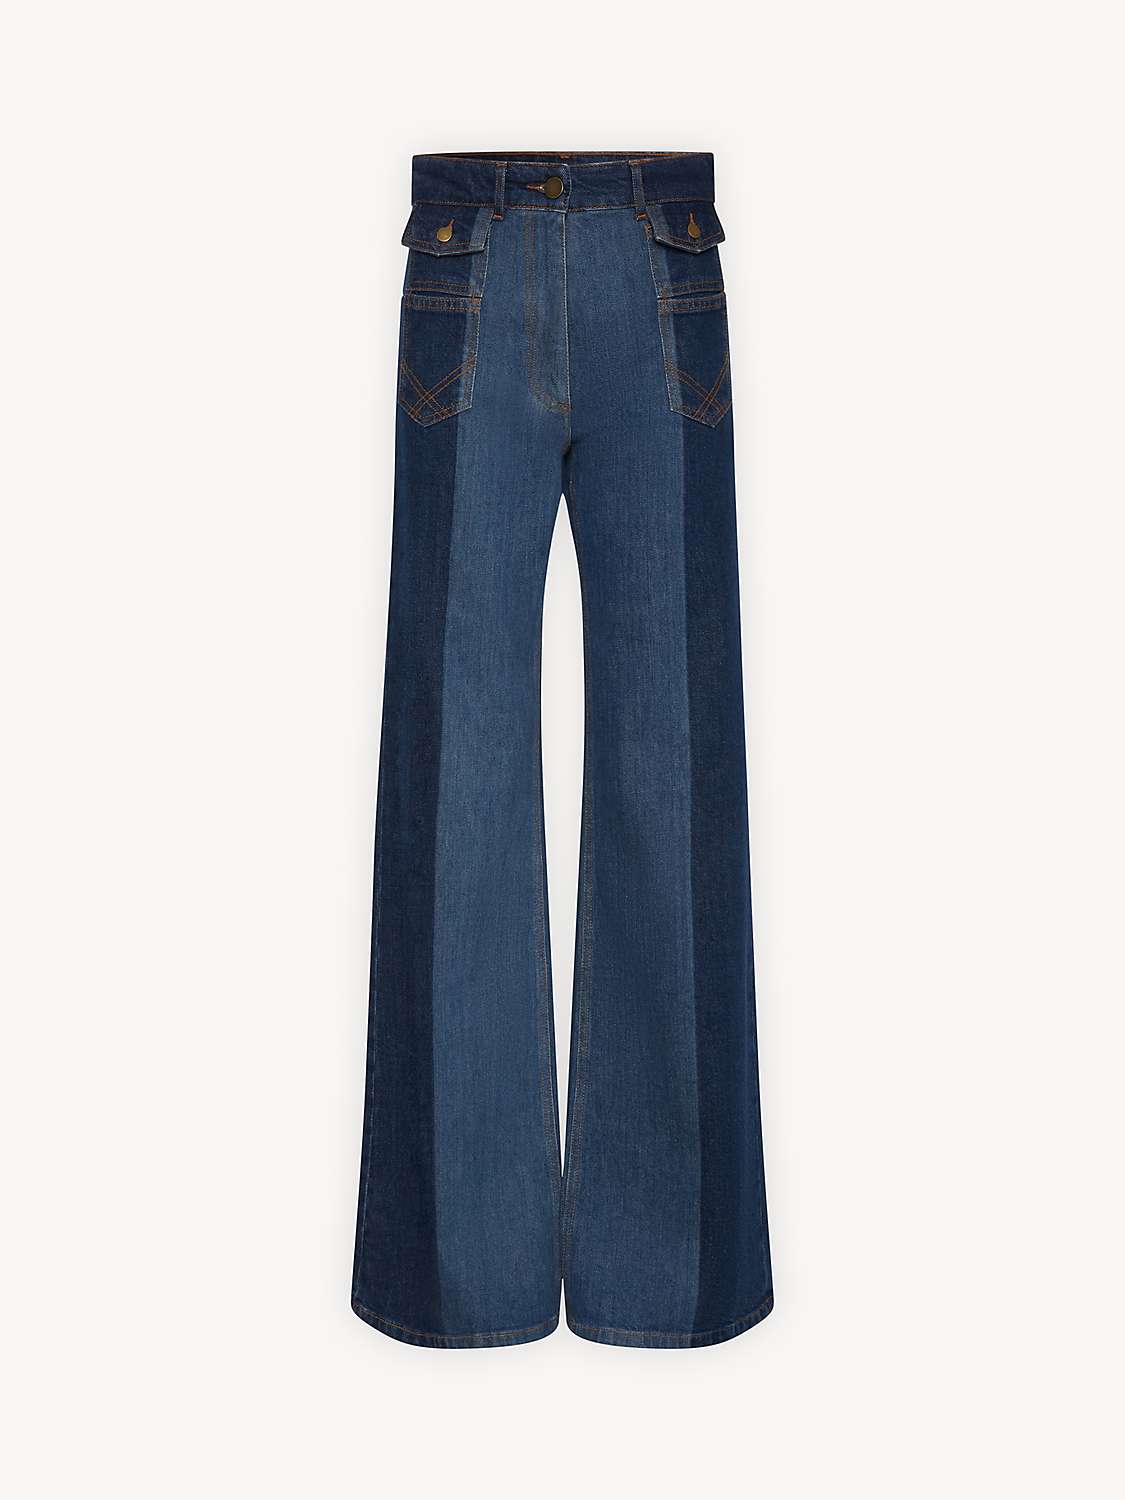 Buy Gerard Darel Pantalon Jeans, Blue Online at johnlewis.com